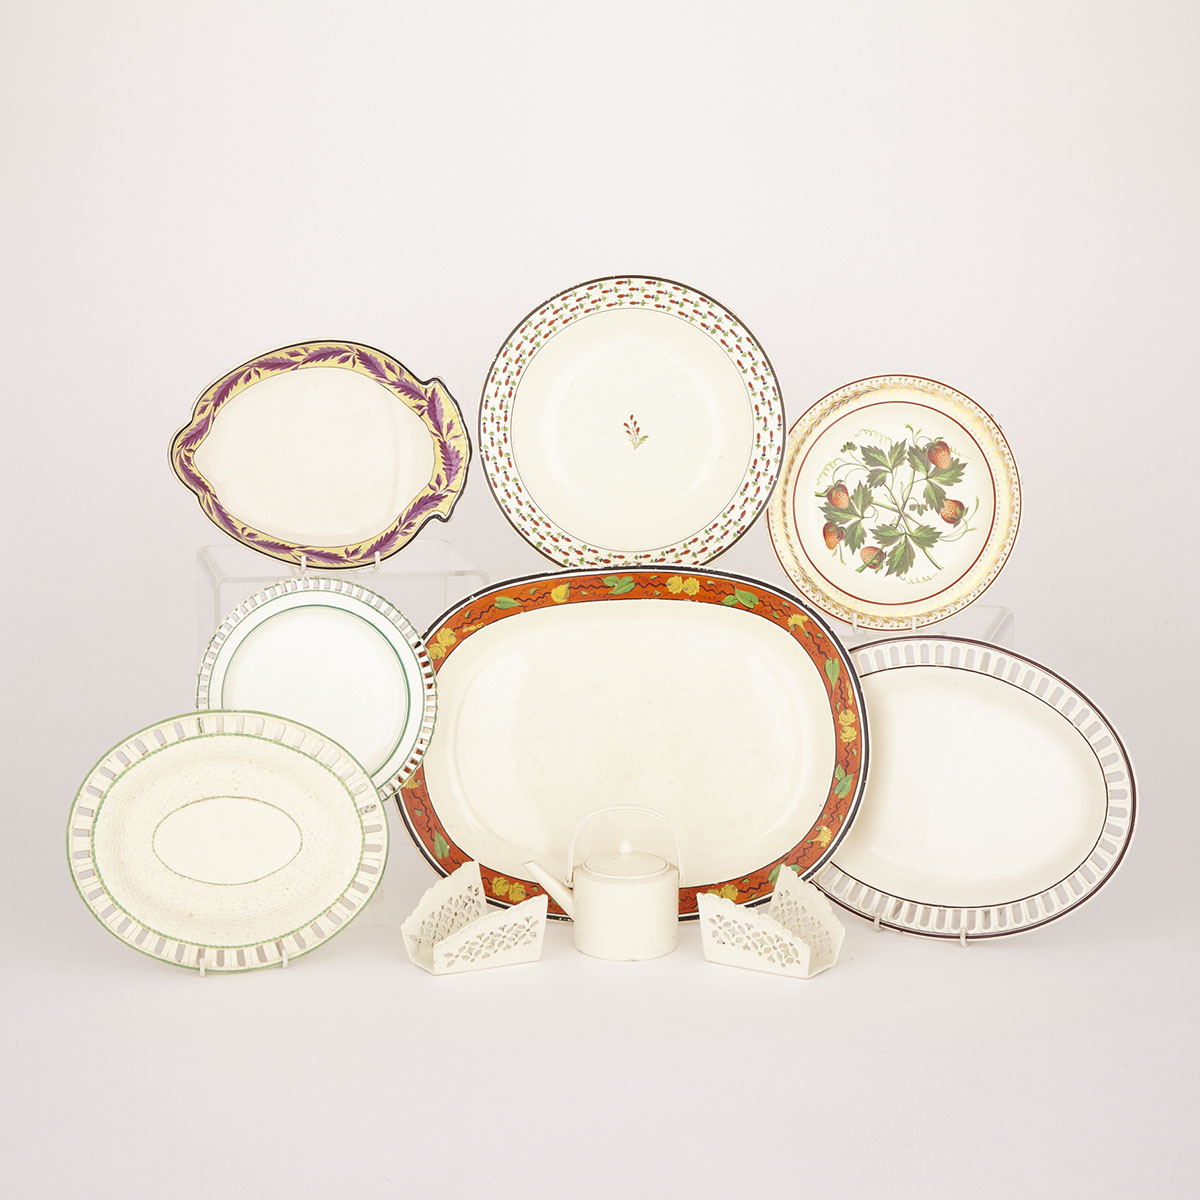 Group of English Creamware, 19th century